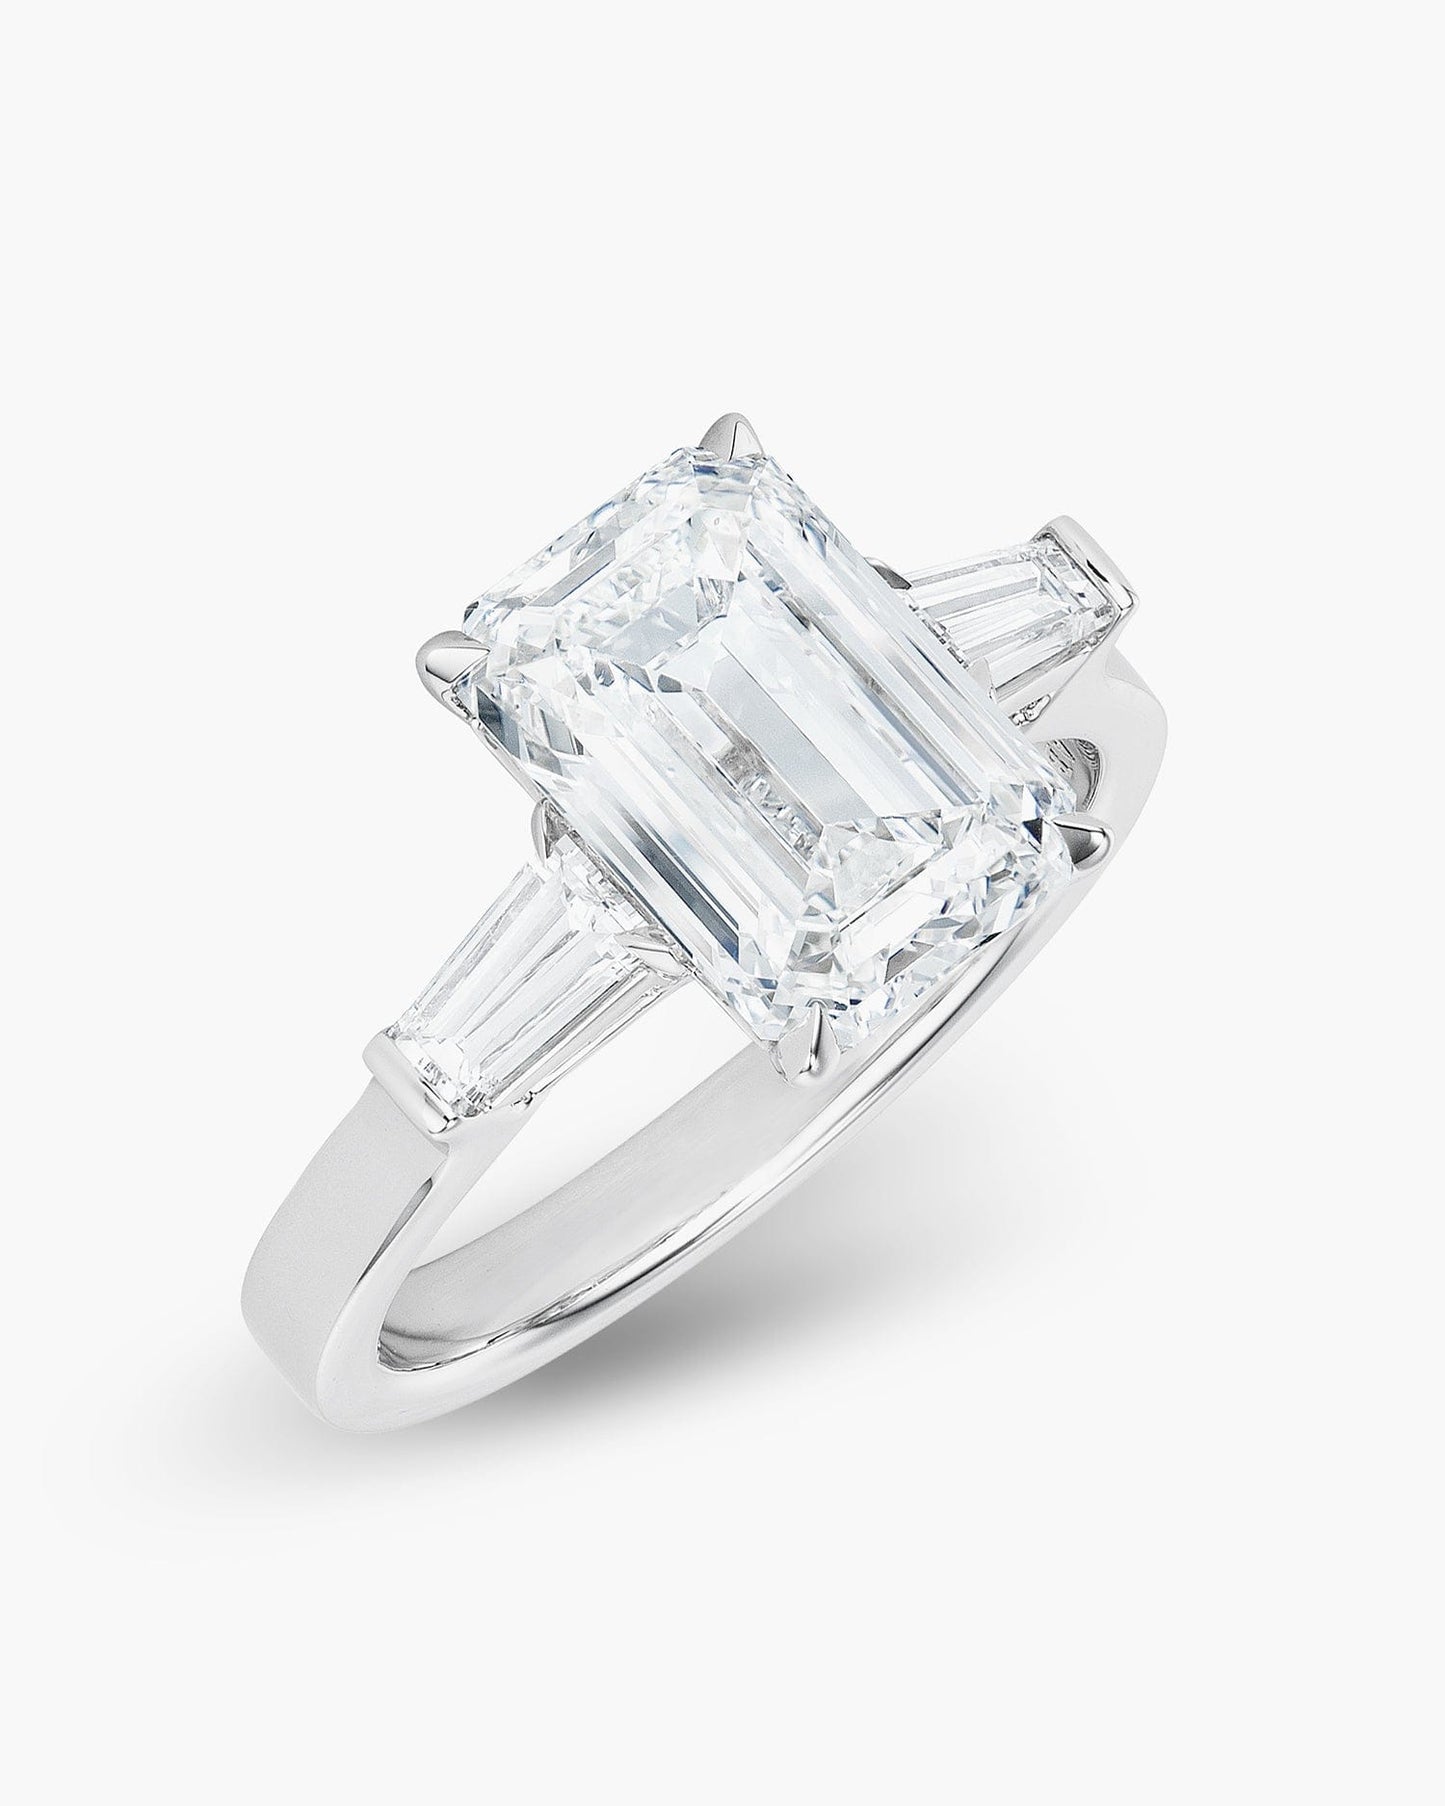 3.19 carat Emerald Cut Diamond Ring